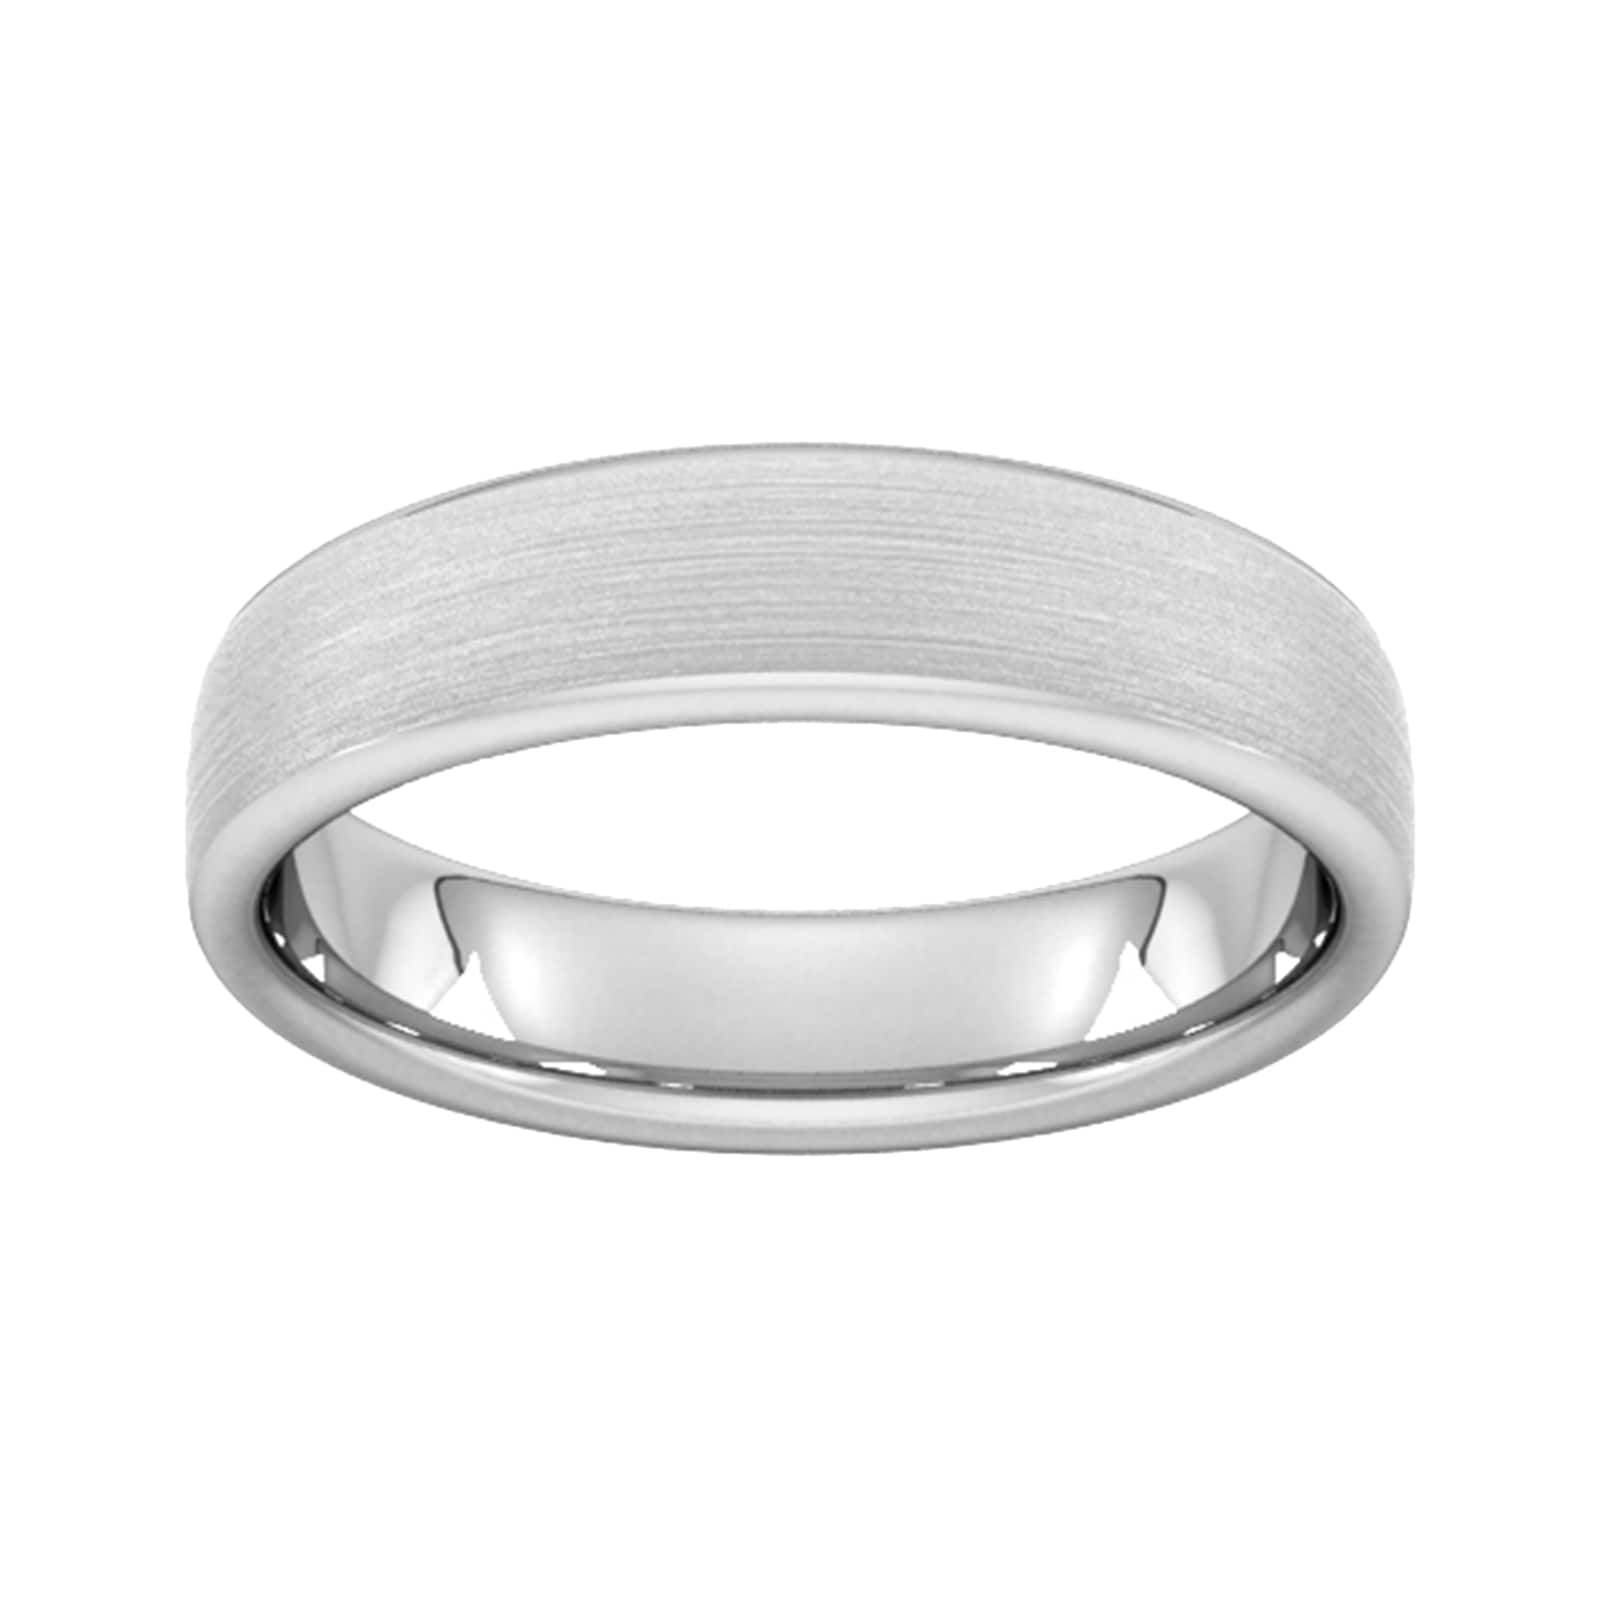 5mm Slight Court Heavy Matt Finished Wedding Ring In 18 Carat White Gold - Ring Size L